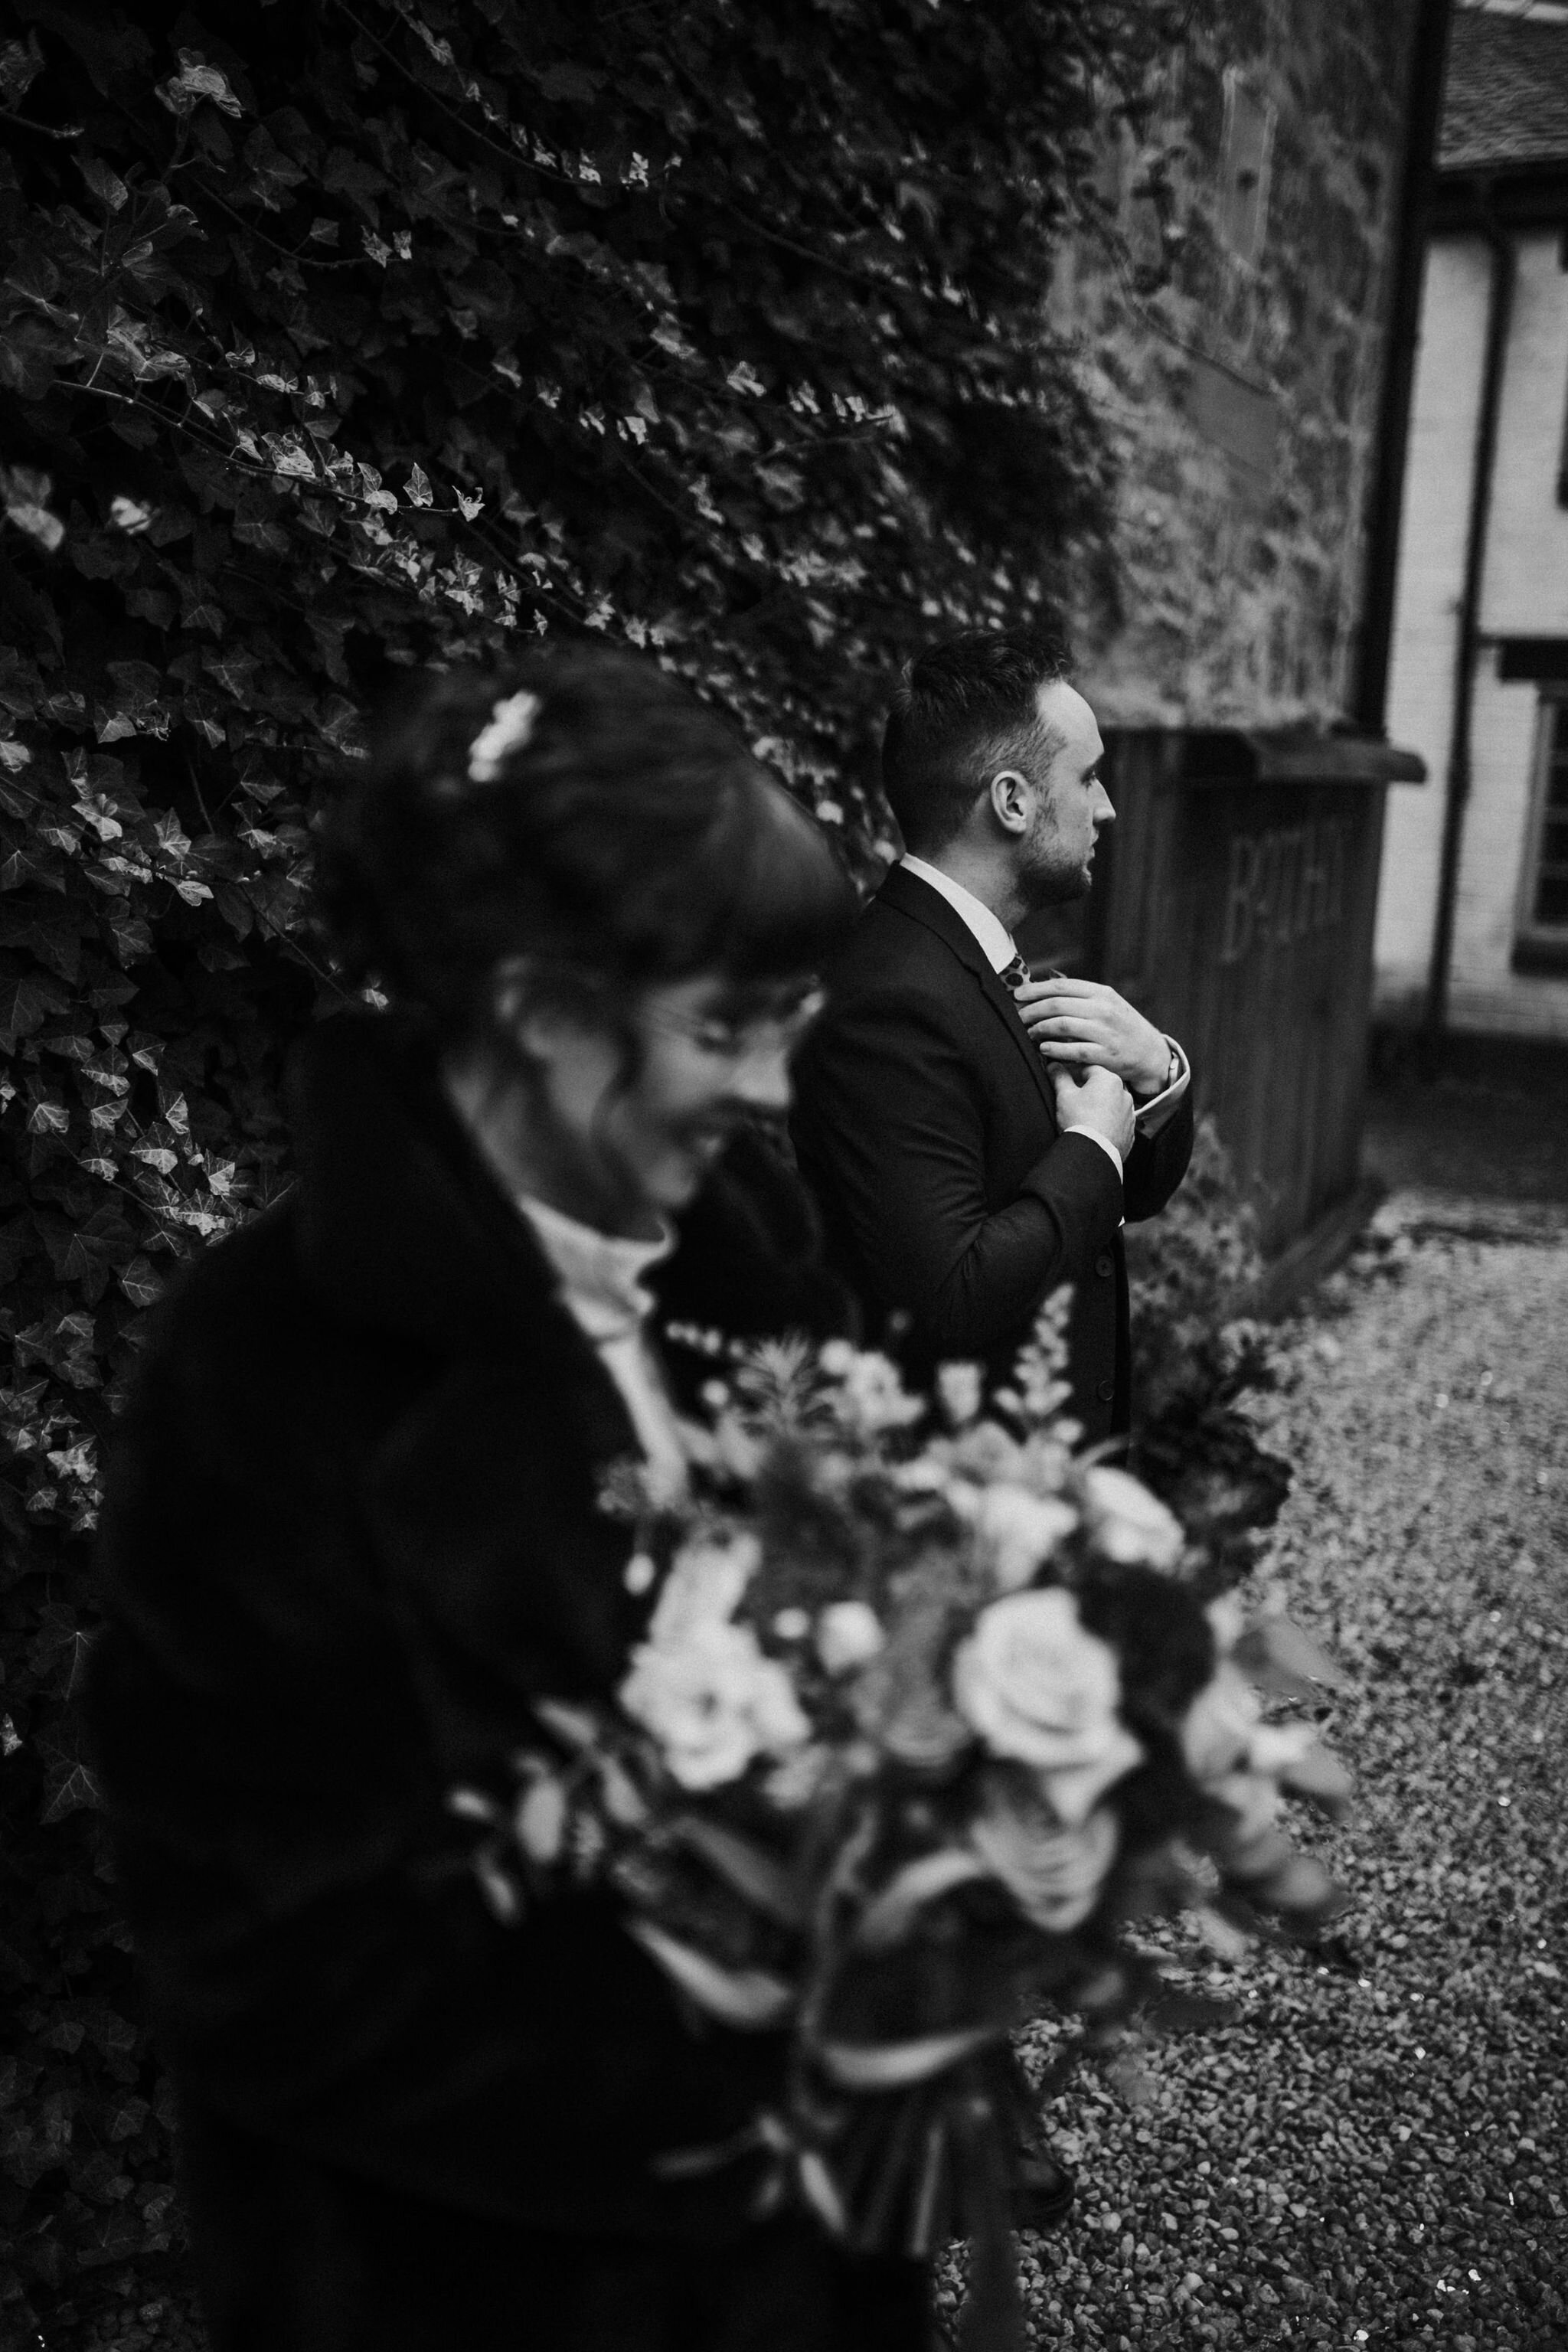  Glasgow City wedding blog photos 